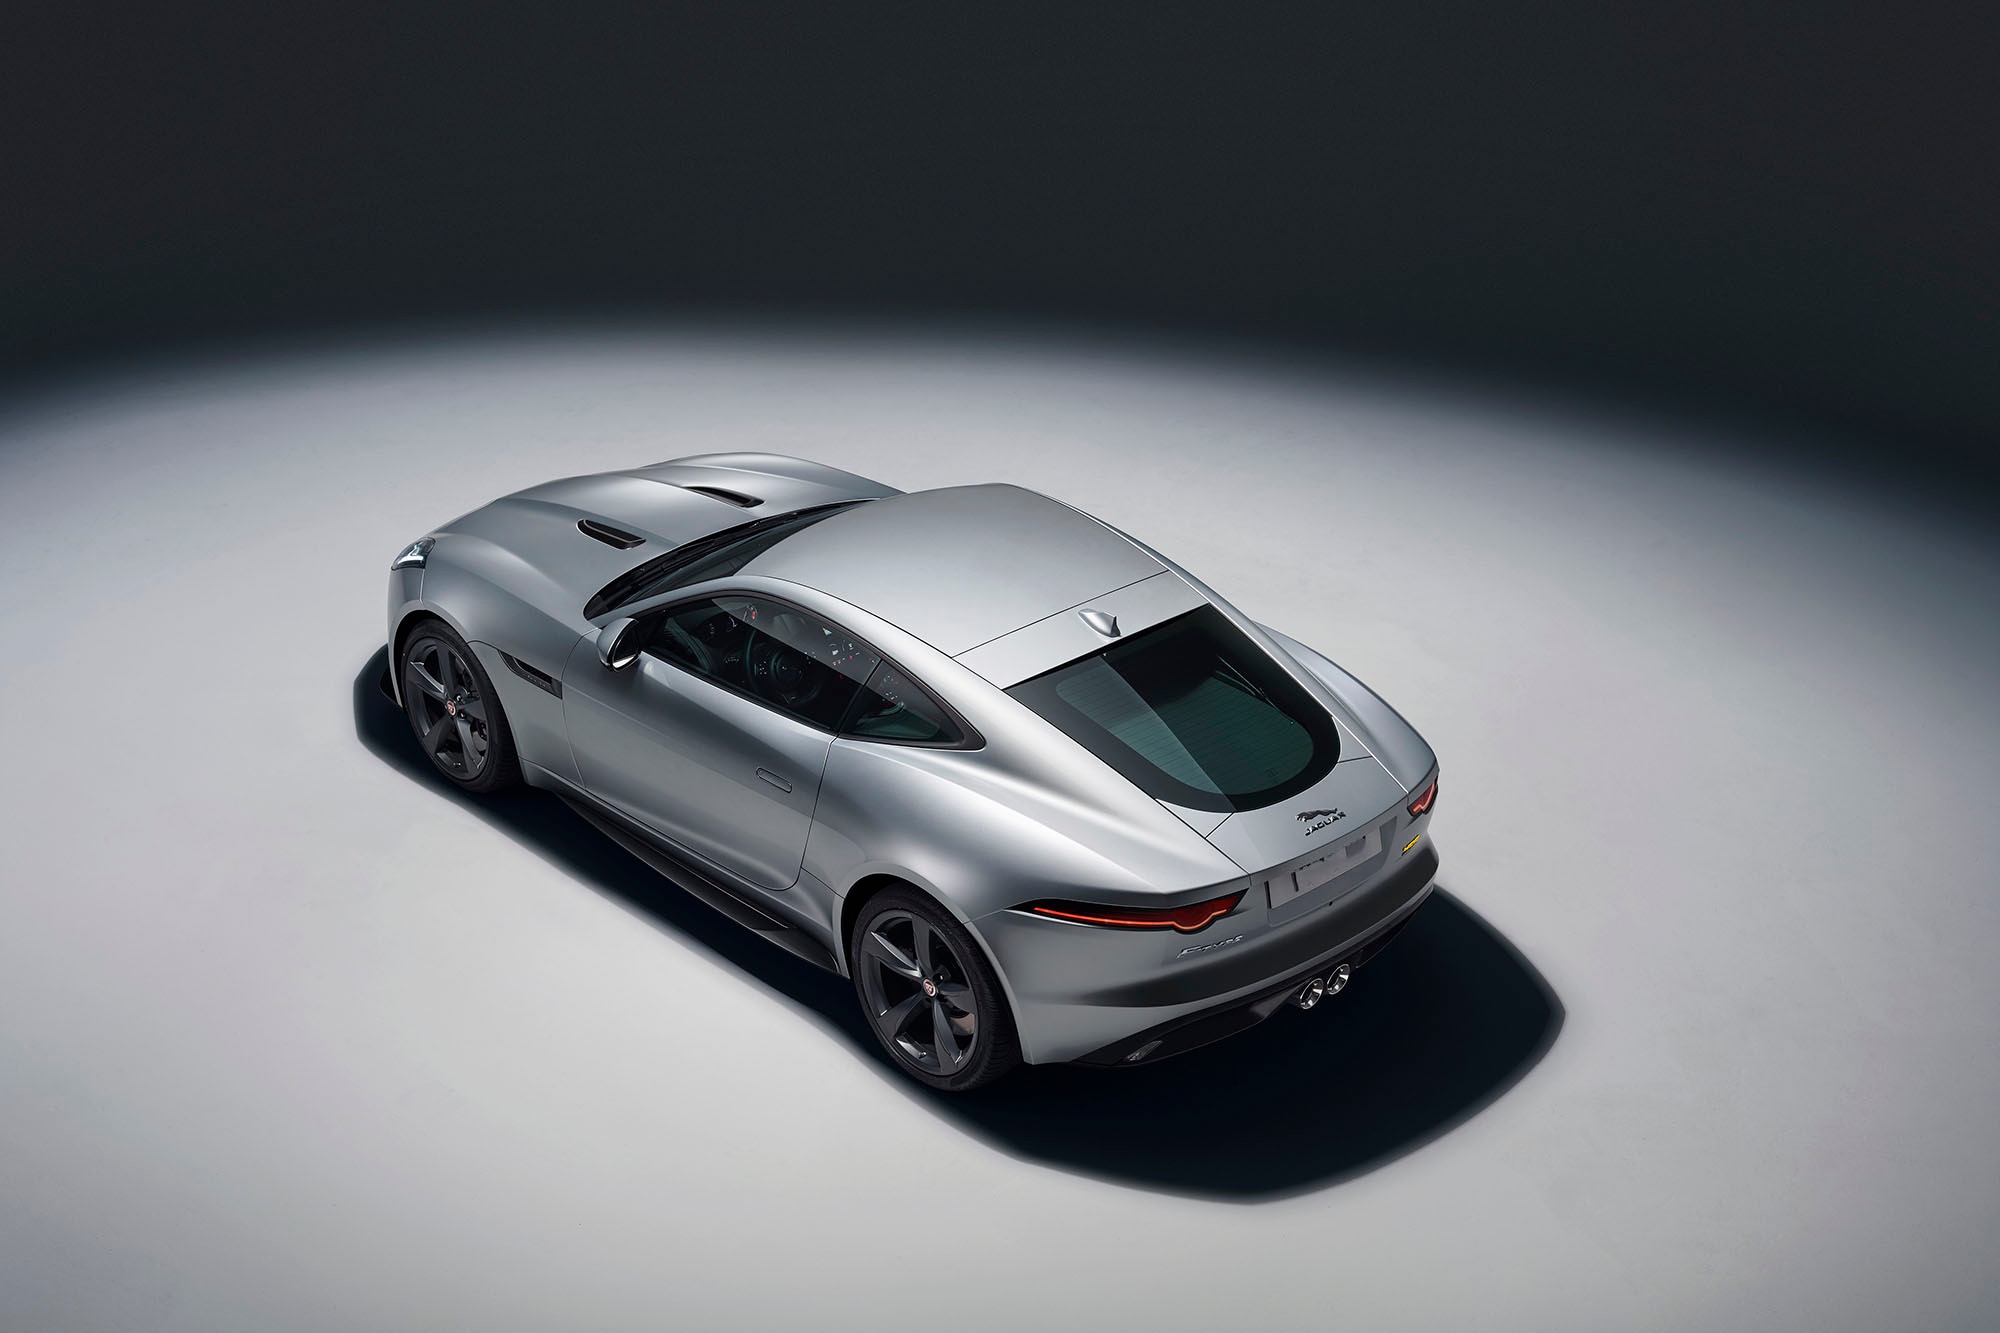 Jaguar F-Type in silver matte paint